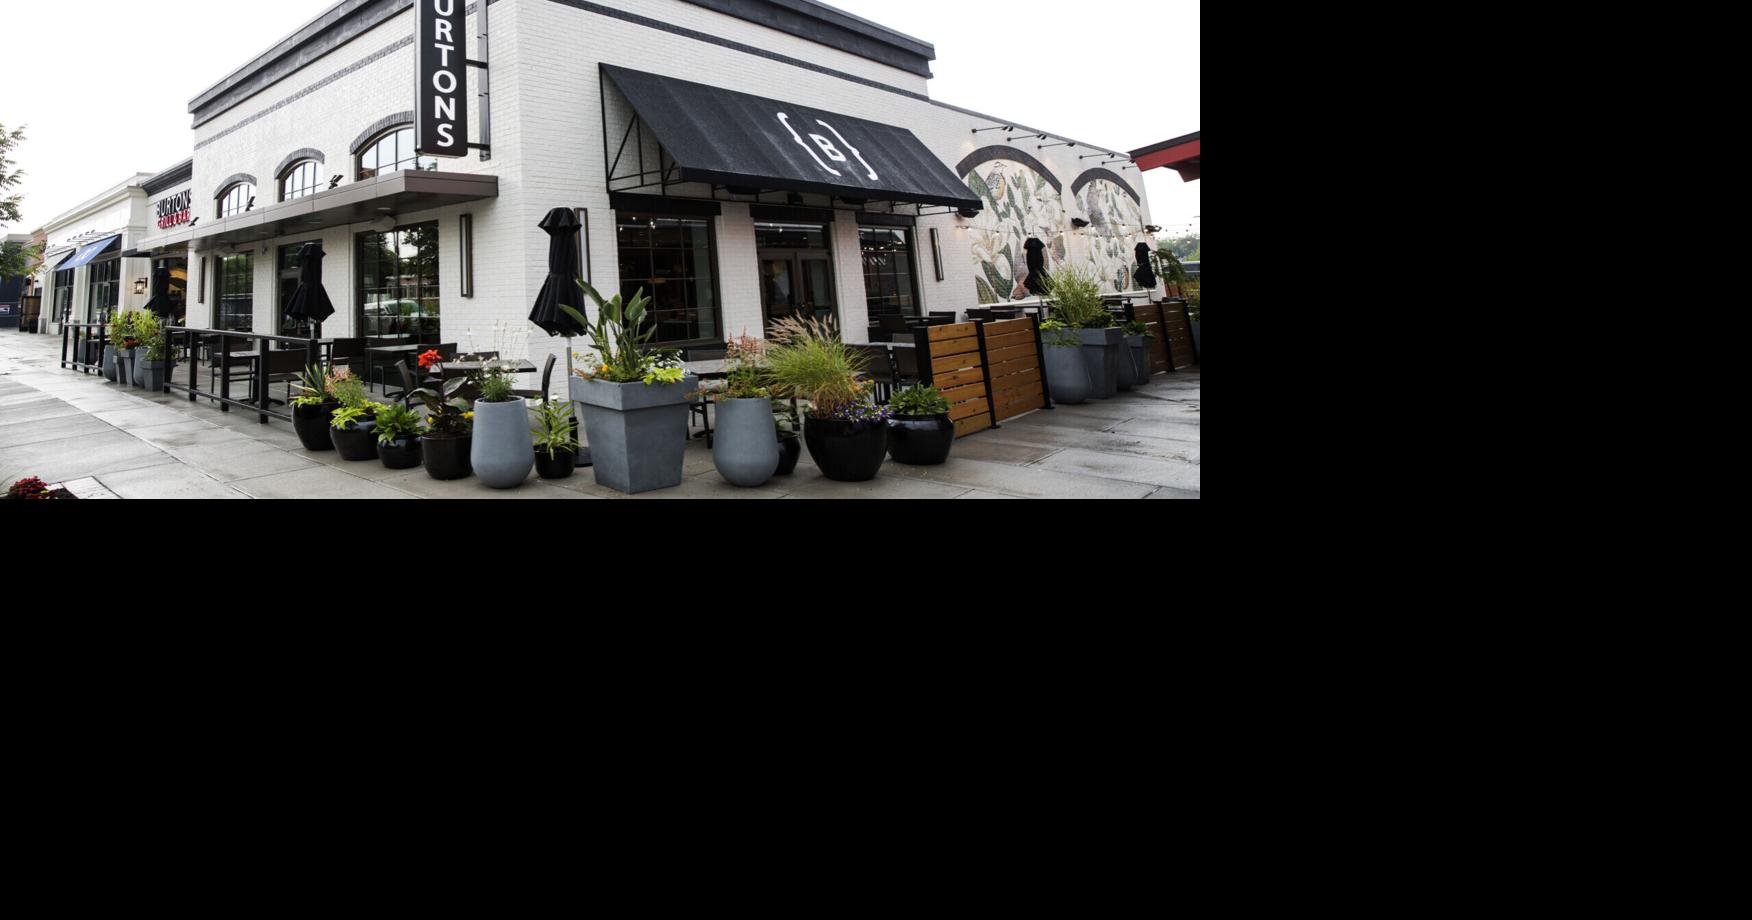 Burtons Grill & Bar opening in Carytown Exchange this week